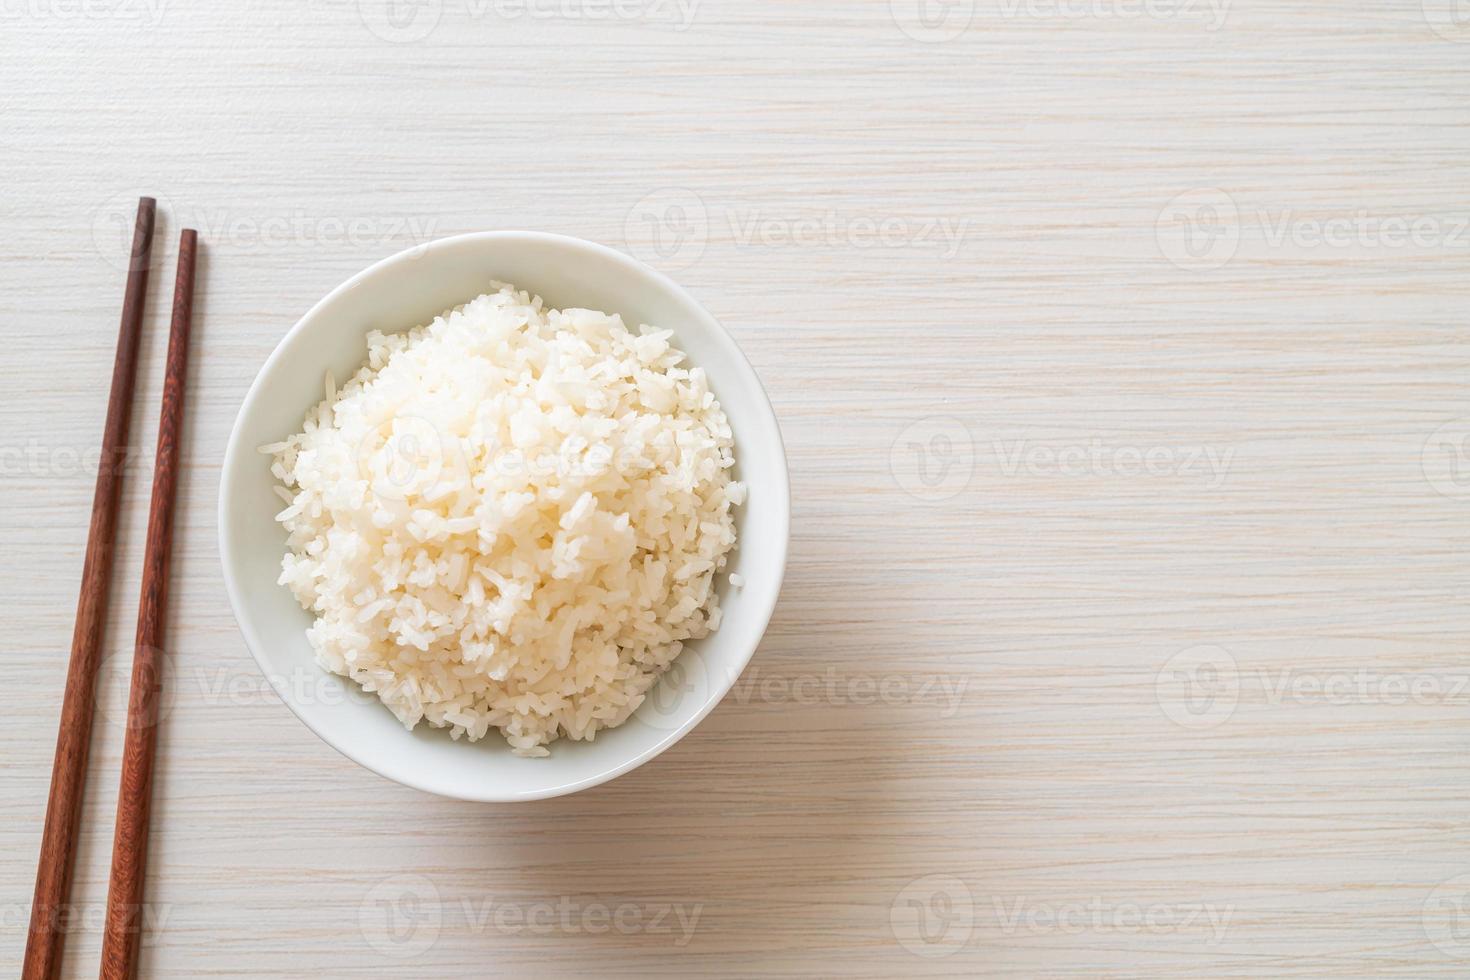 gekookte Thaise jasmijn witte rijstkom foto